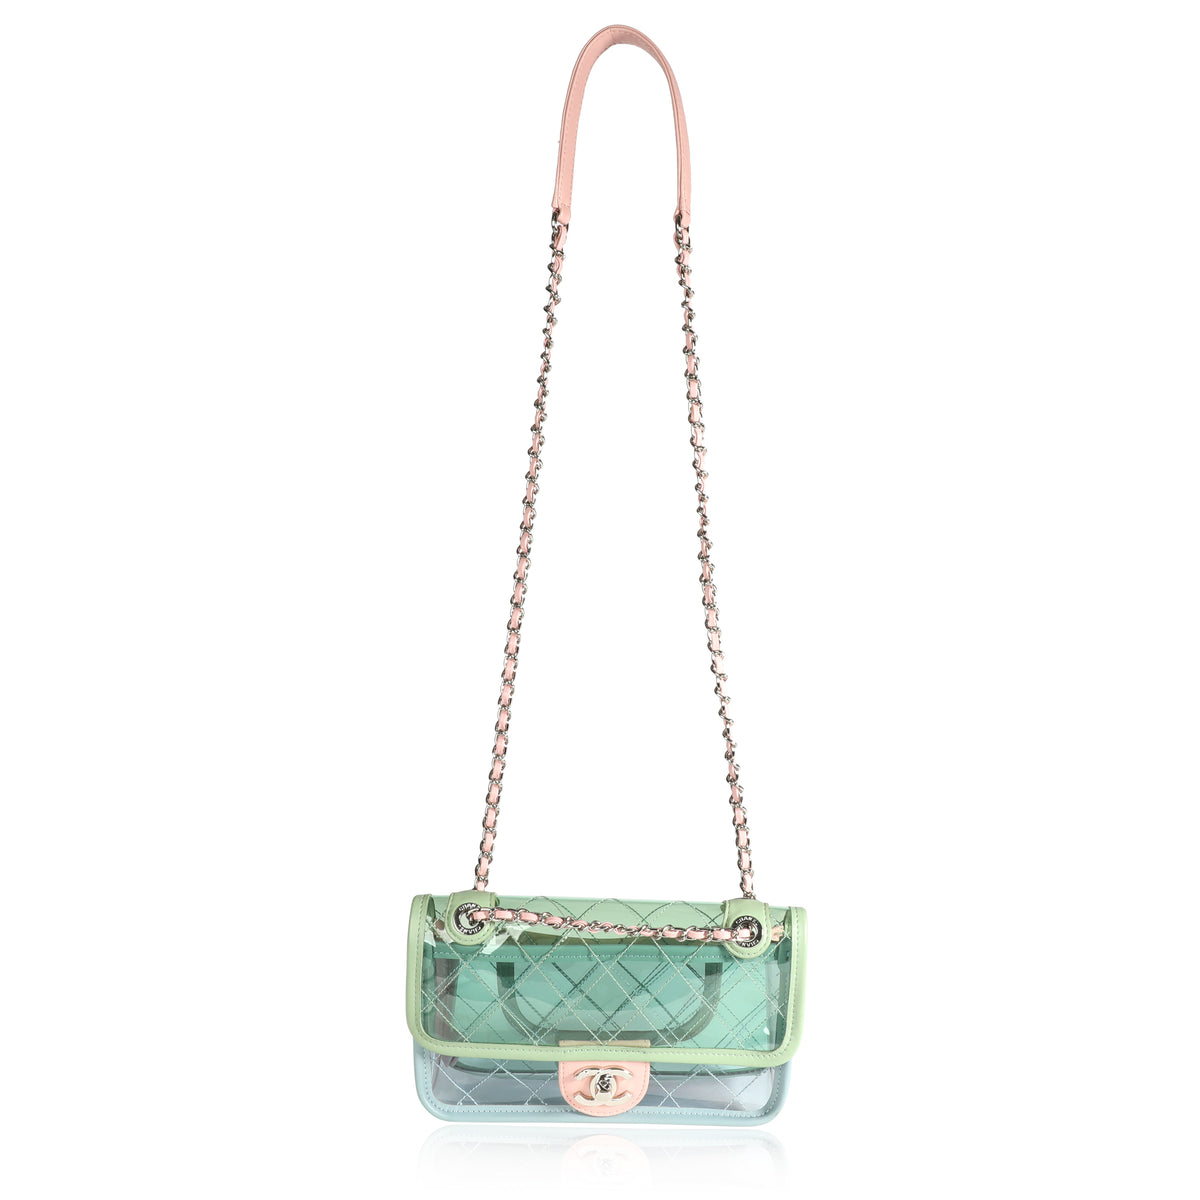 Chanel Pastel PVC & Leather Coco Splash Mini Flap Bag by WP